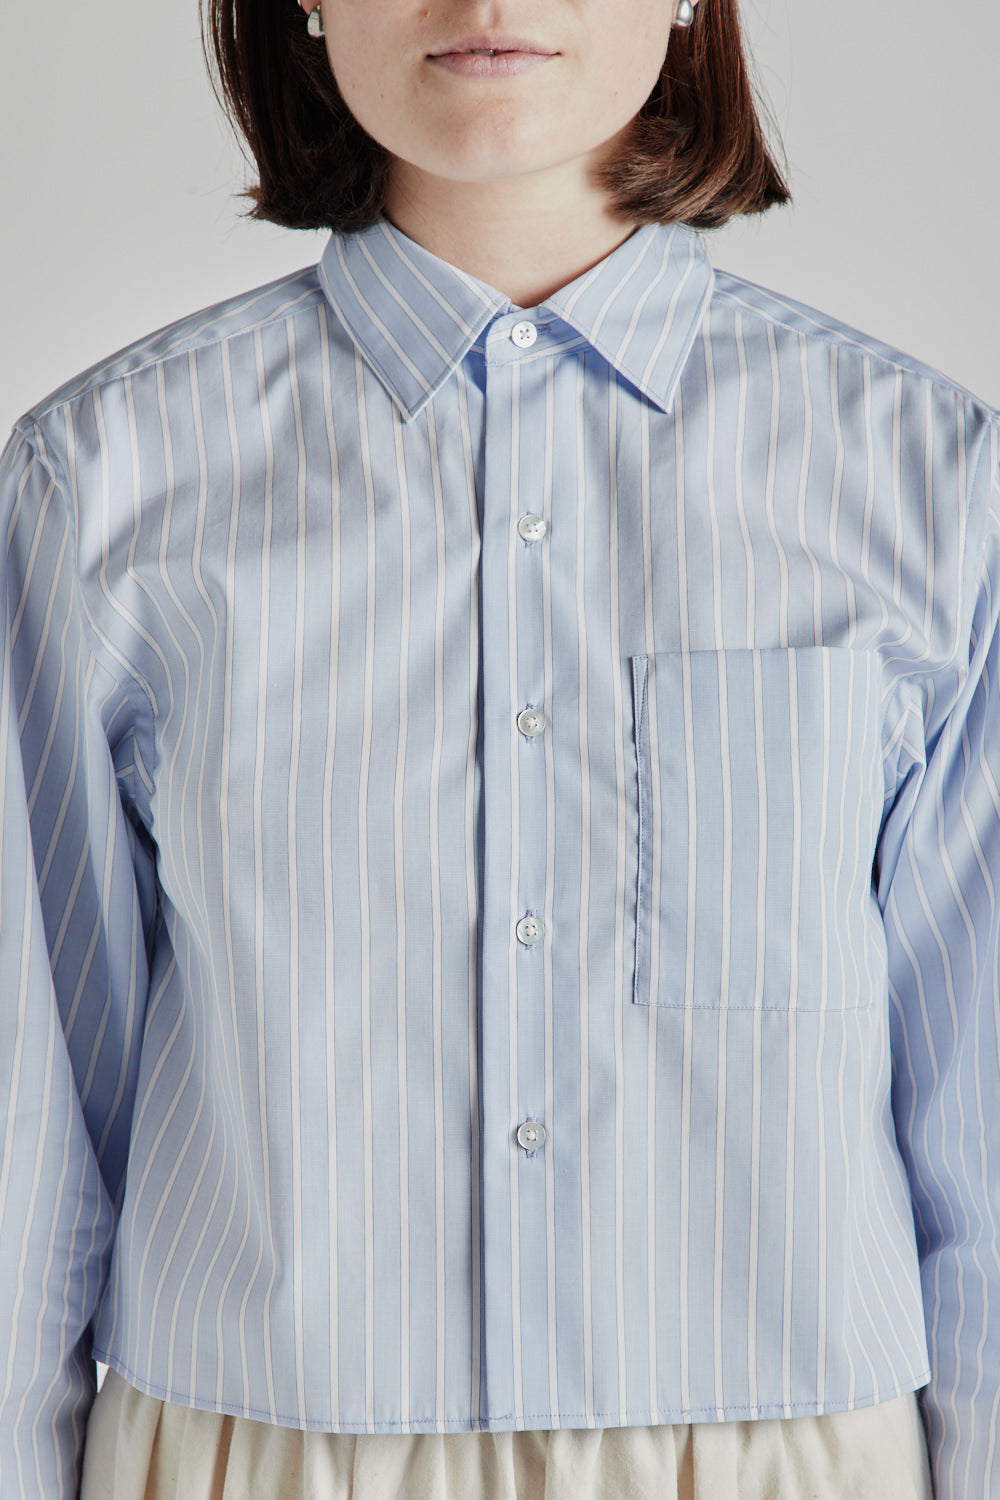 Stripe Short Shirt - Saxe/White